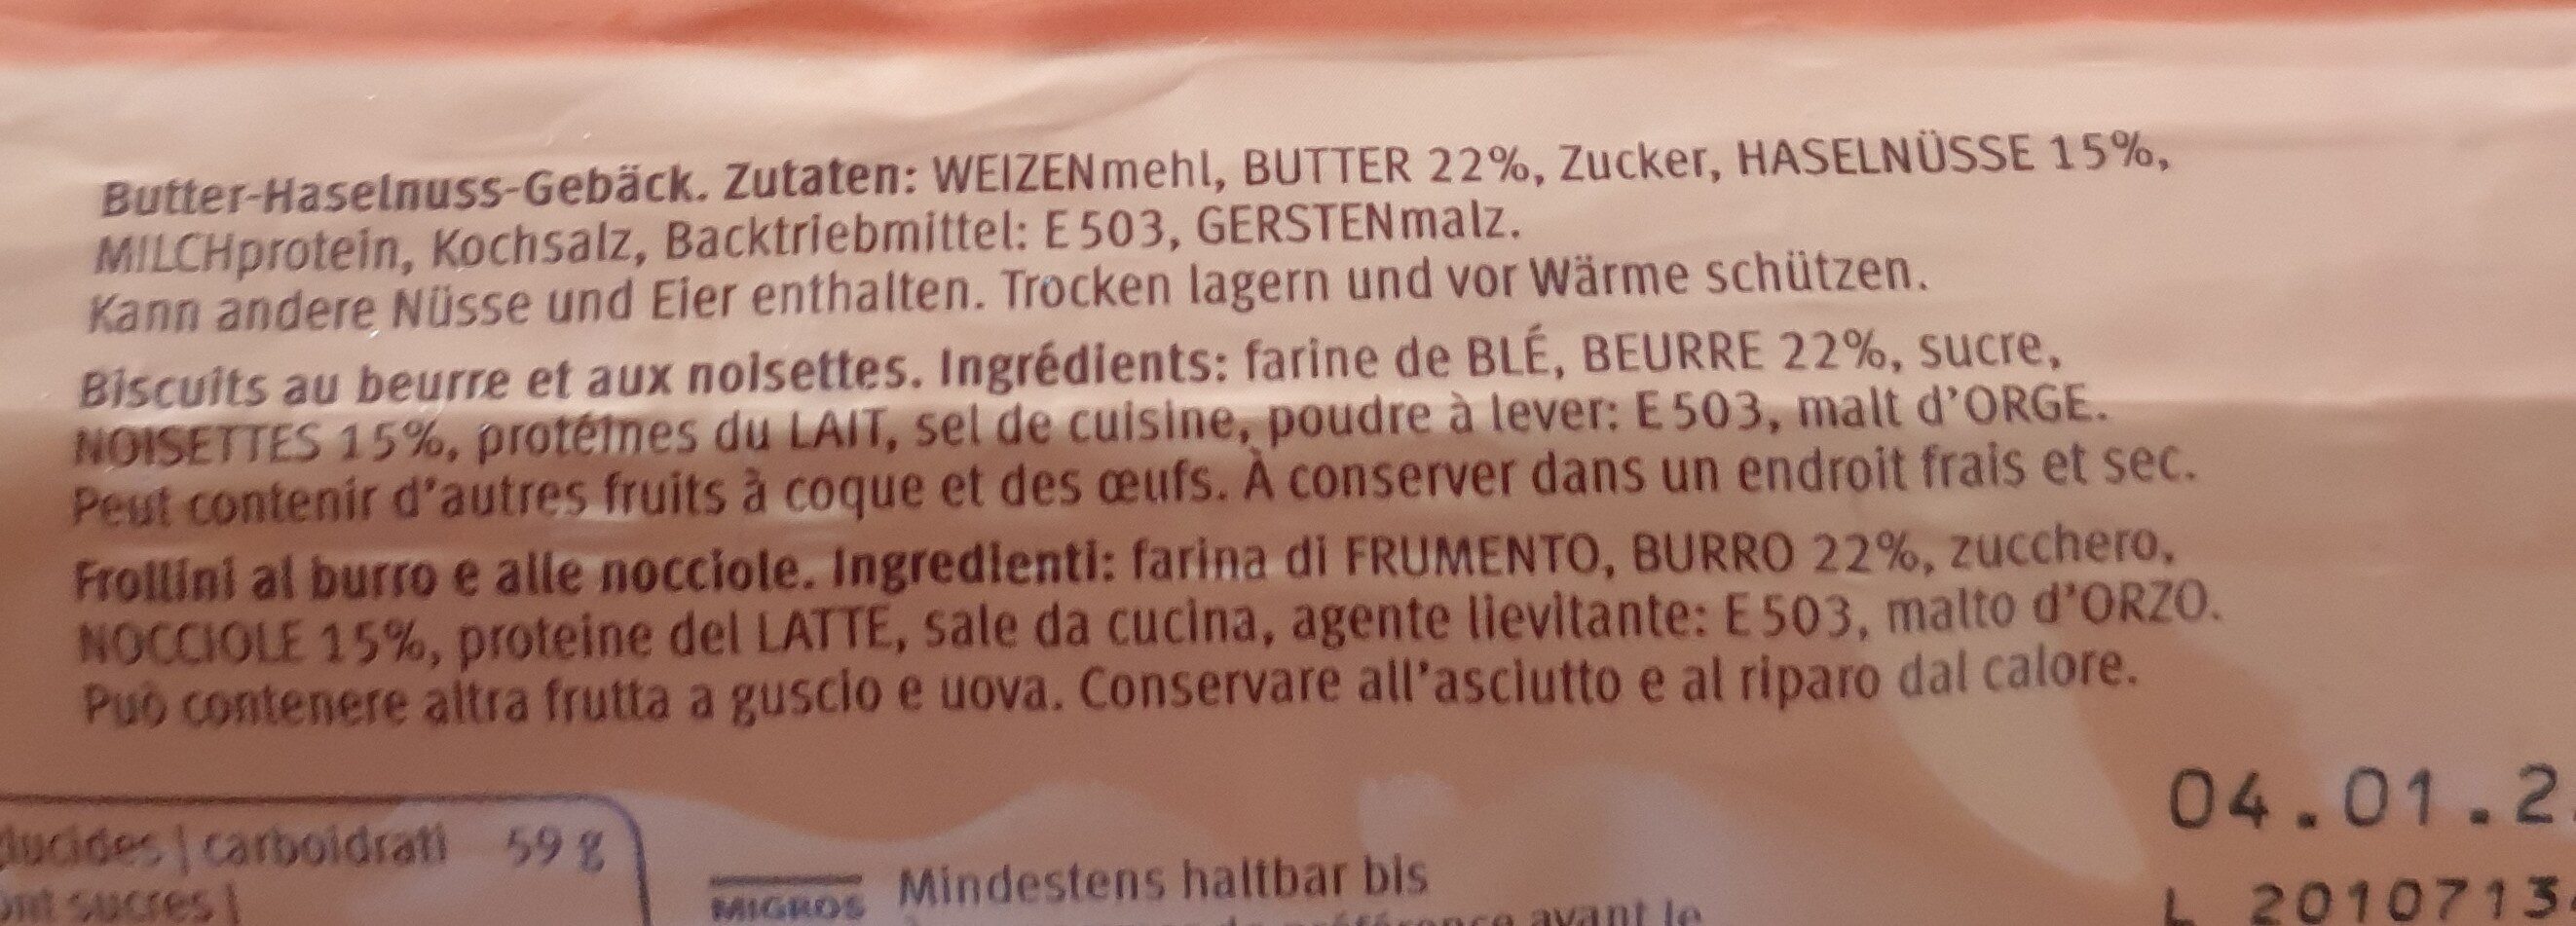 Biscuits beurre-noisette - Ingredienti - en